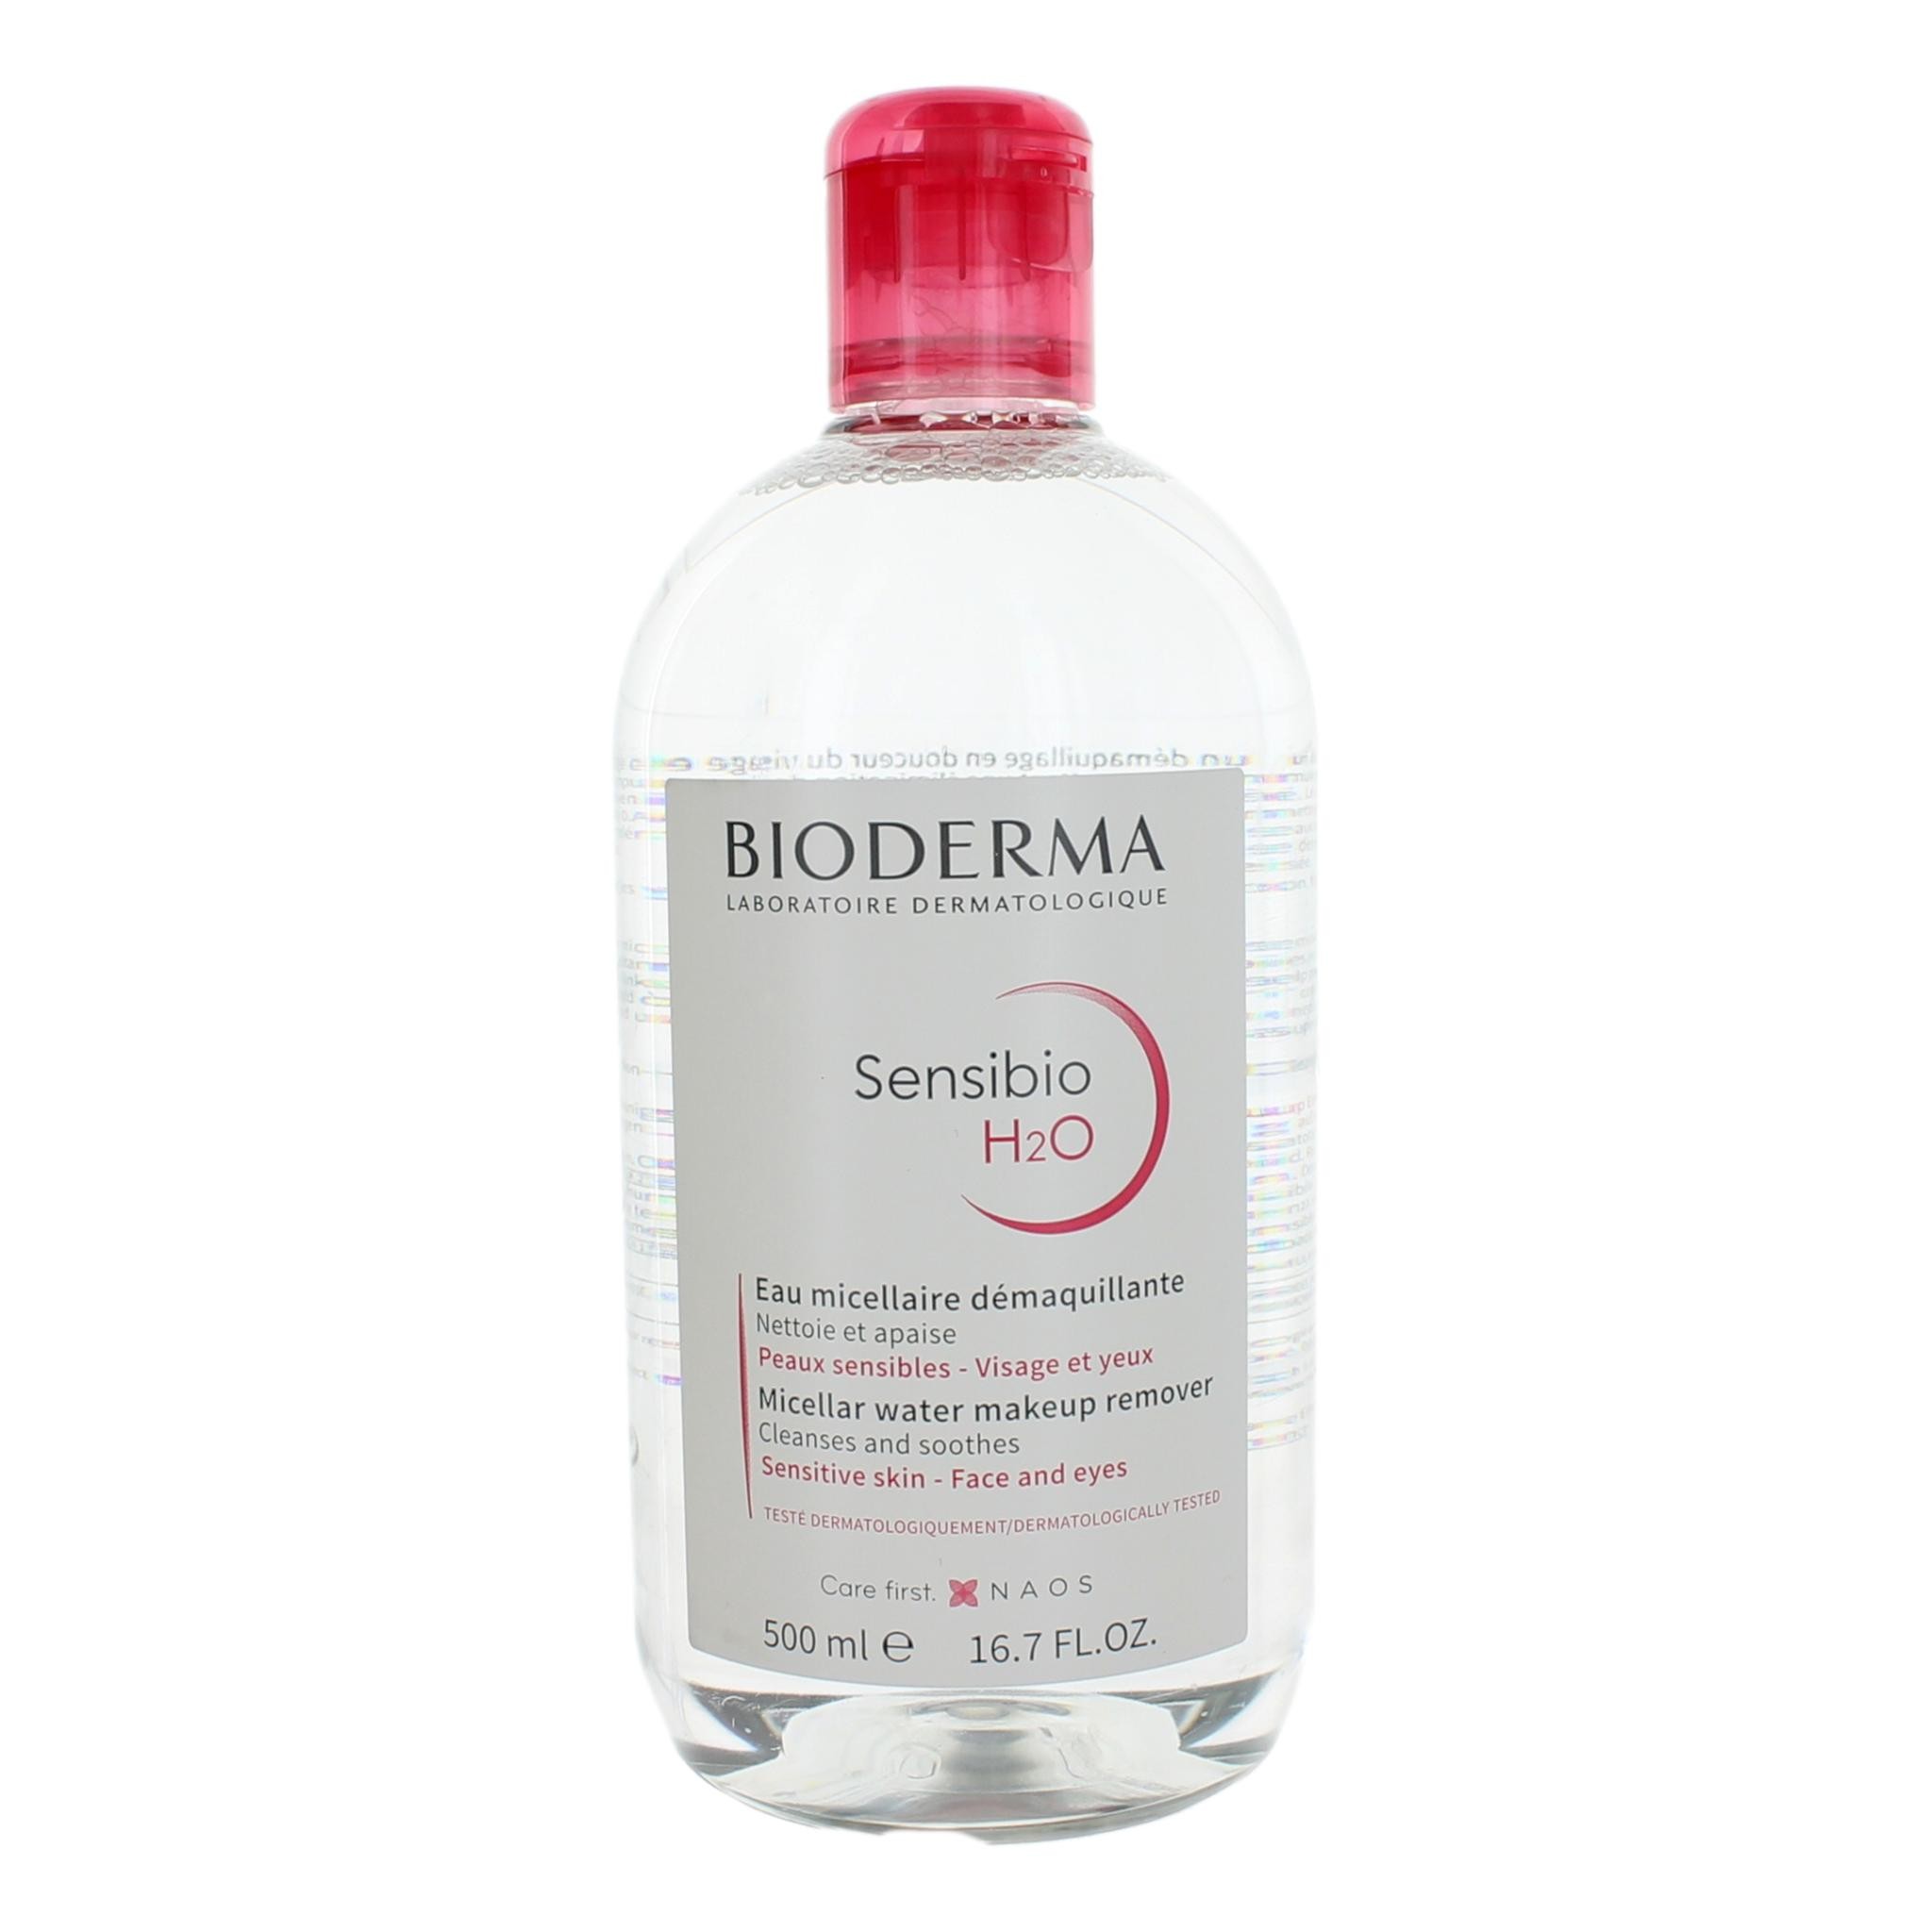 Bioderma Sensibio H2O by Bioderma, 16.7oz Micellar Water Makeup Remover - image 1 of 3